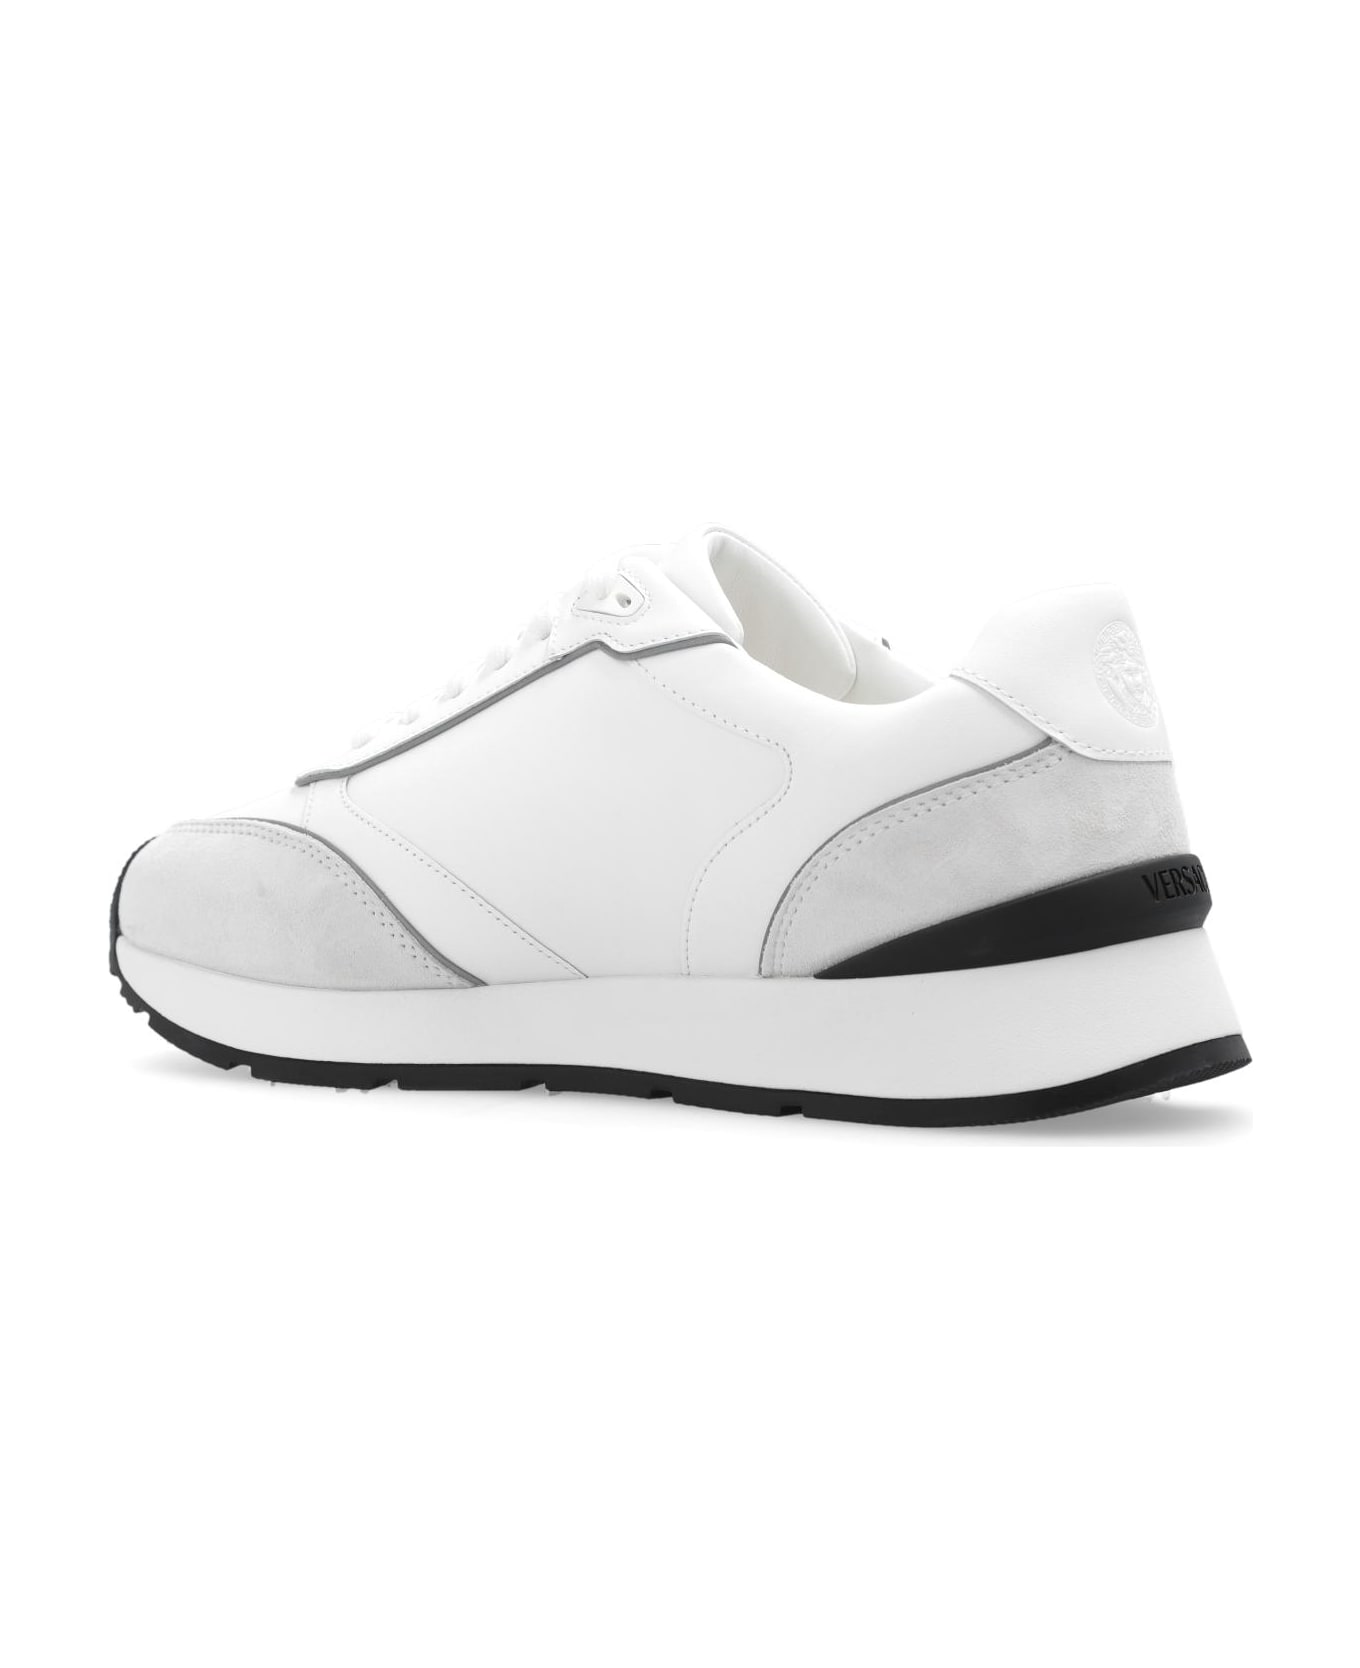 Versace 'milano' Sneakers - Bianco